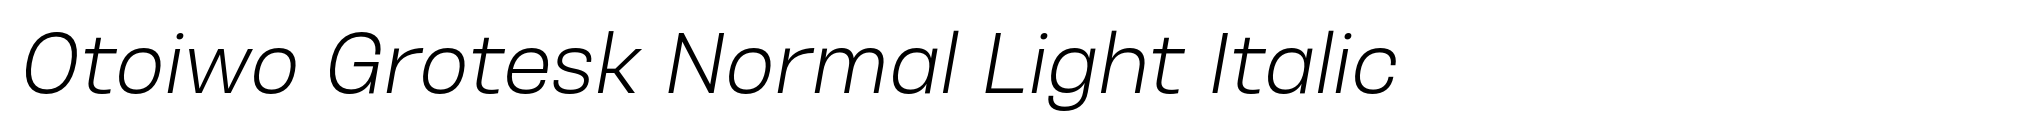 Otoiwo Grotesk Normal Light Italic image